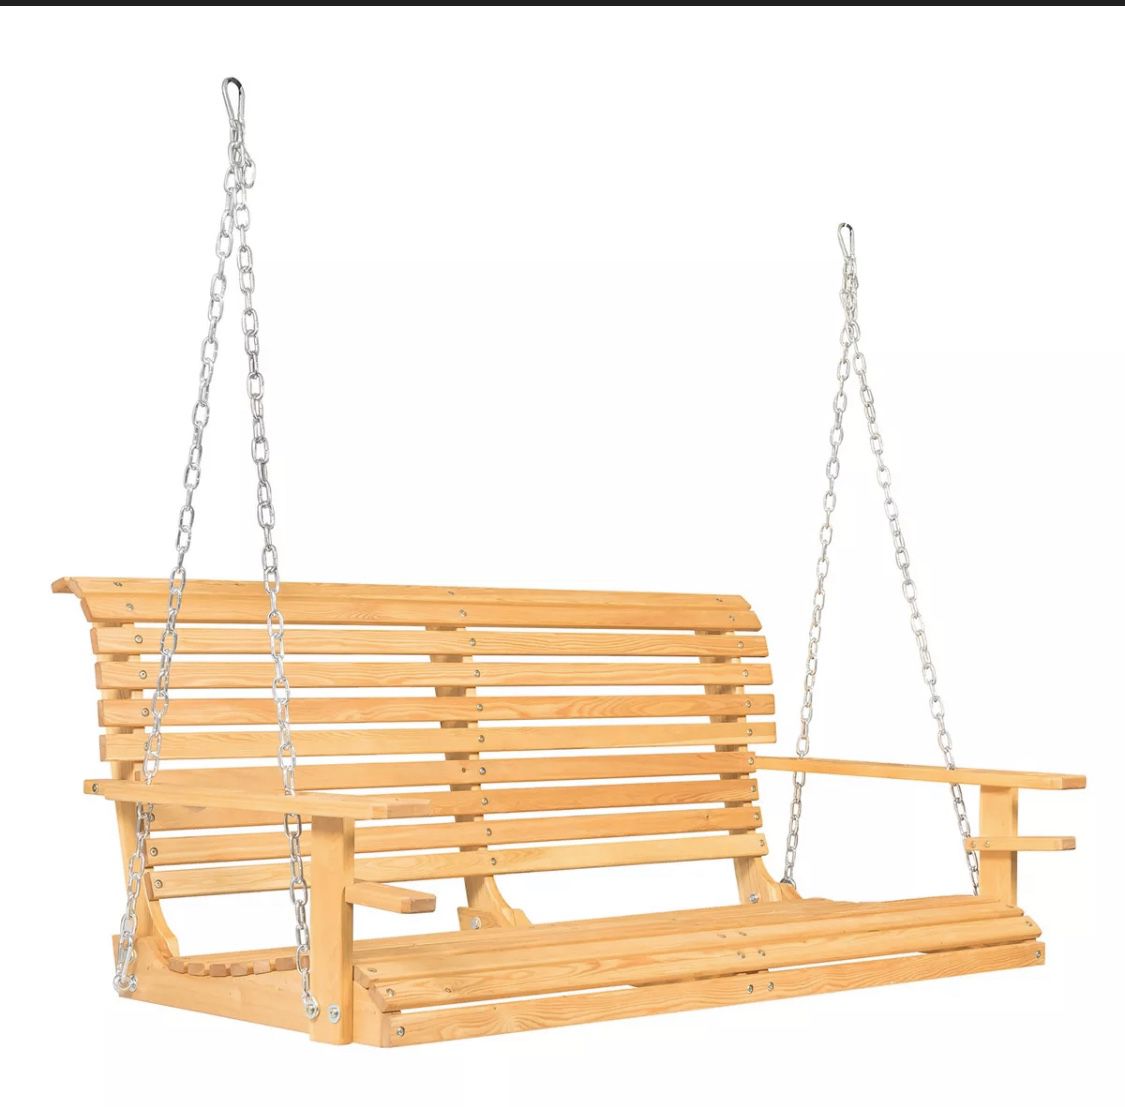 NEW Wooden Swing Patio Chair Garden Deck Furniture